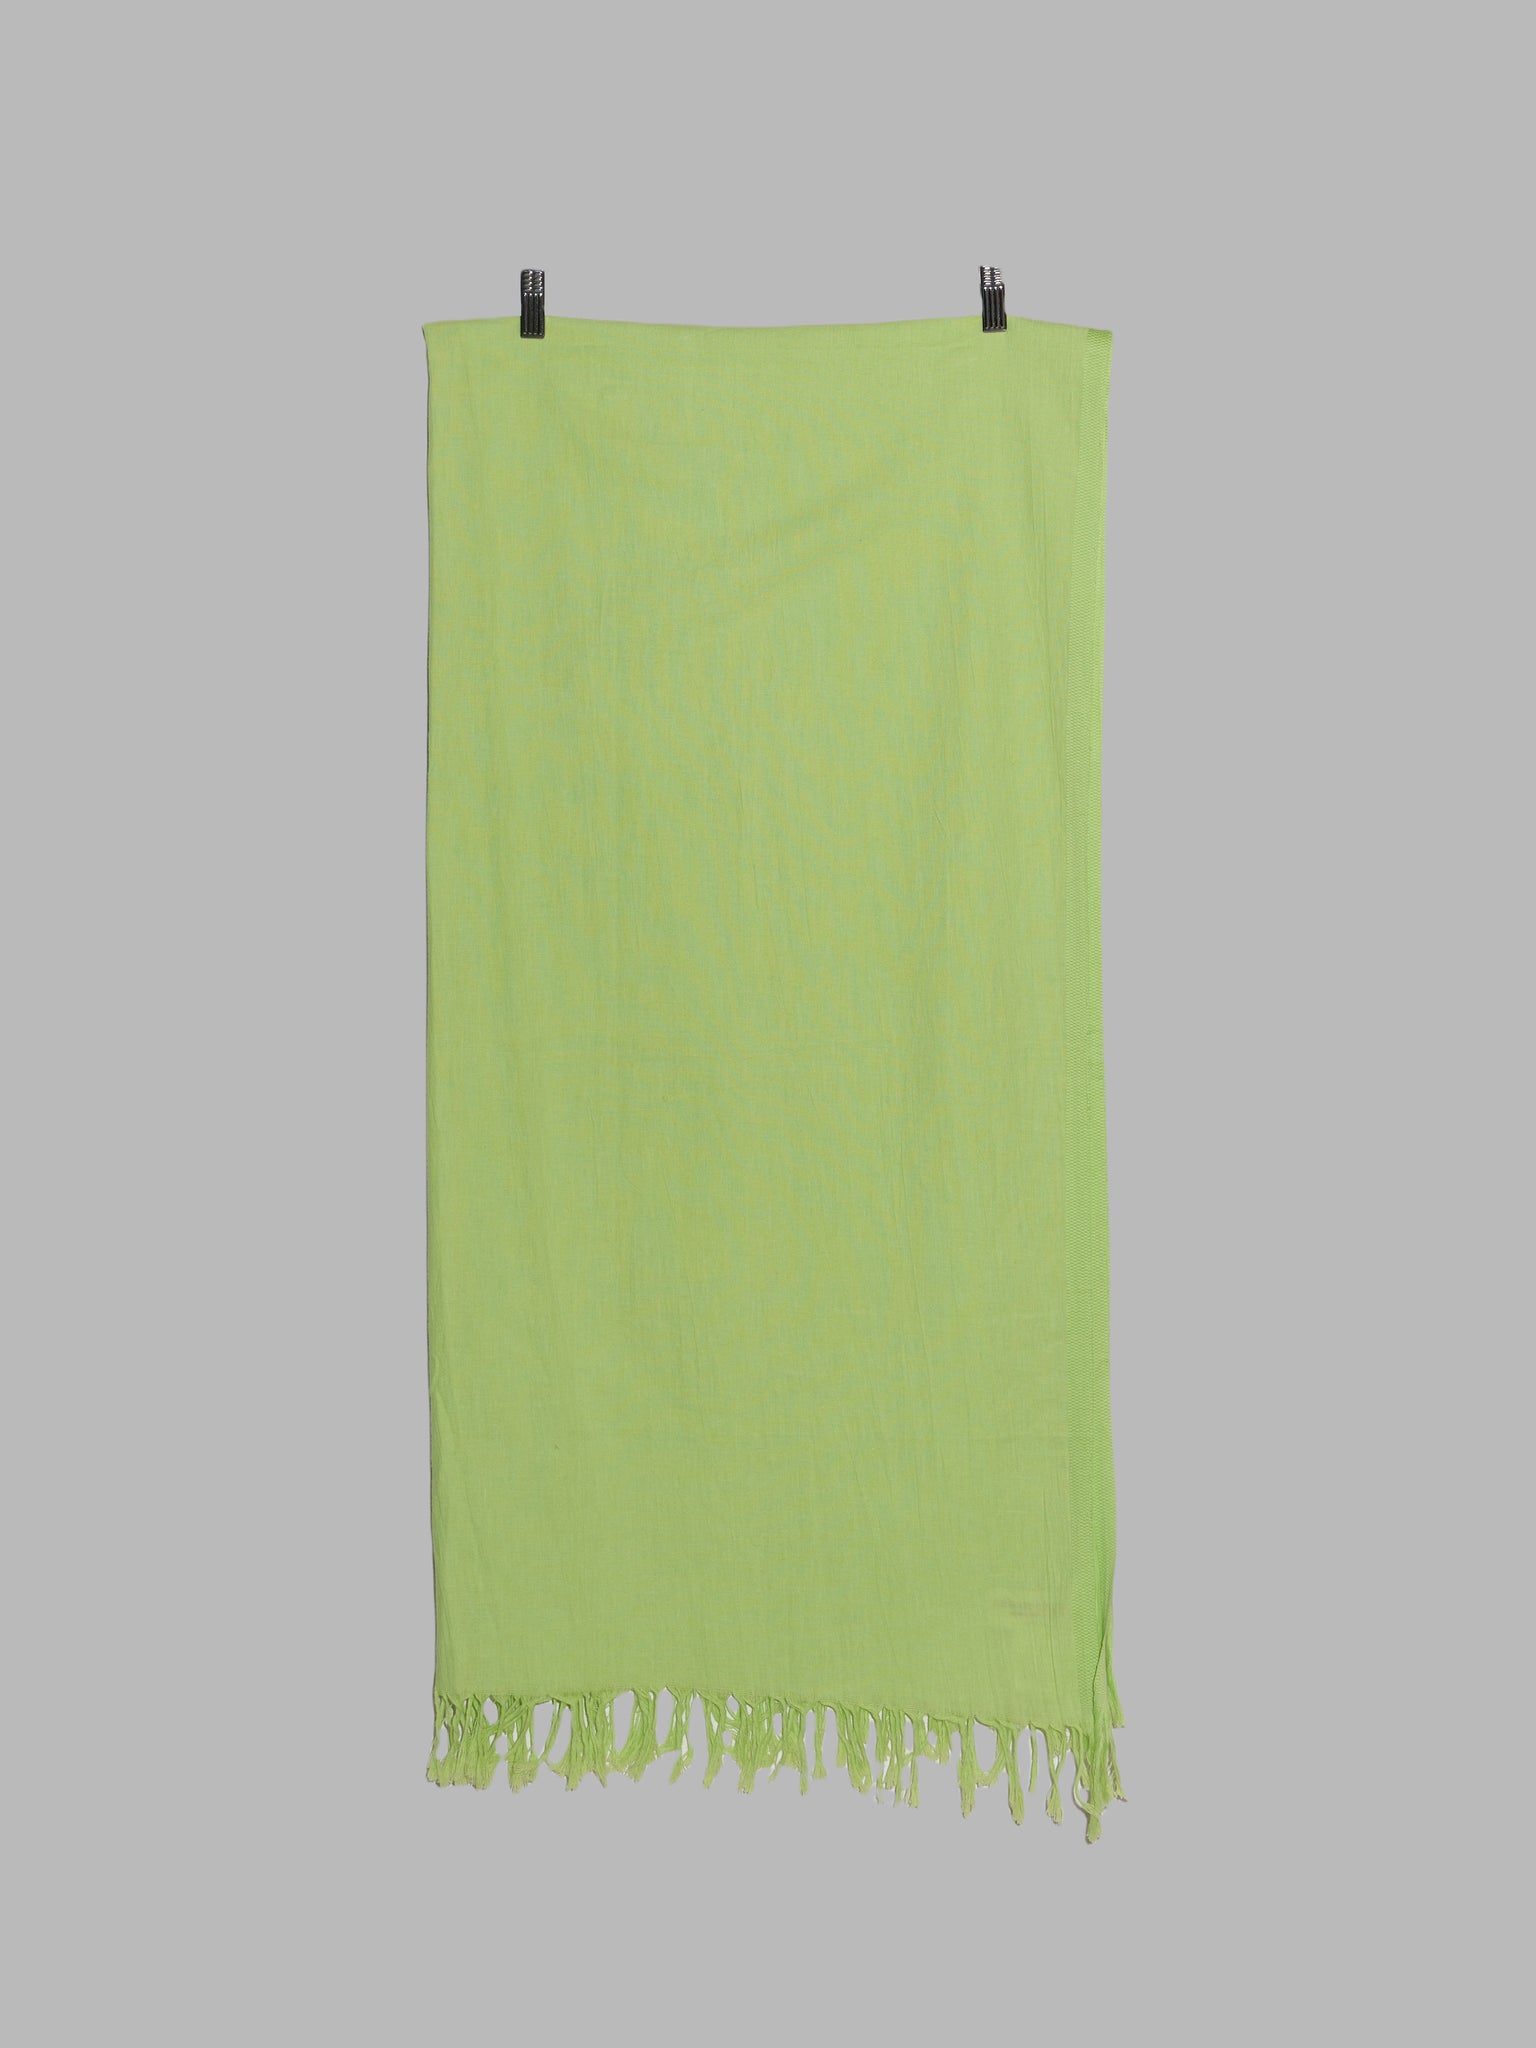 Robe de Chambre Comme des Garcons 1989 fluorescent green cotton scarf or shawl